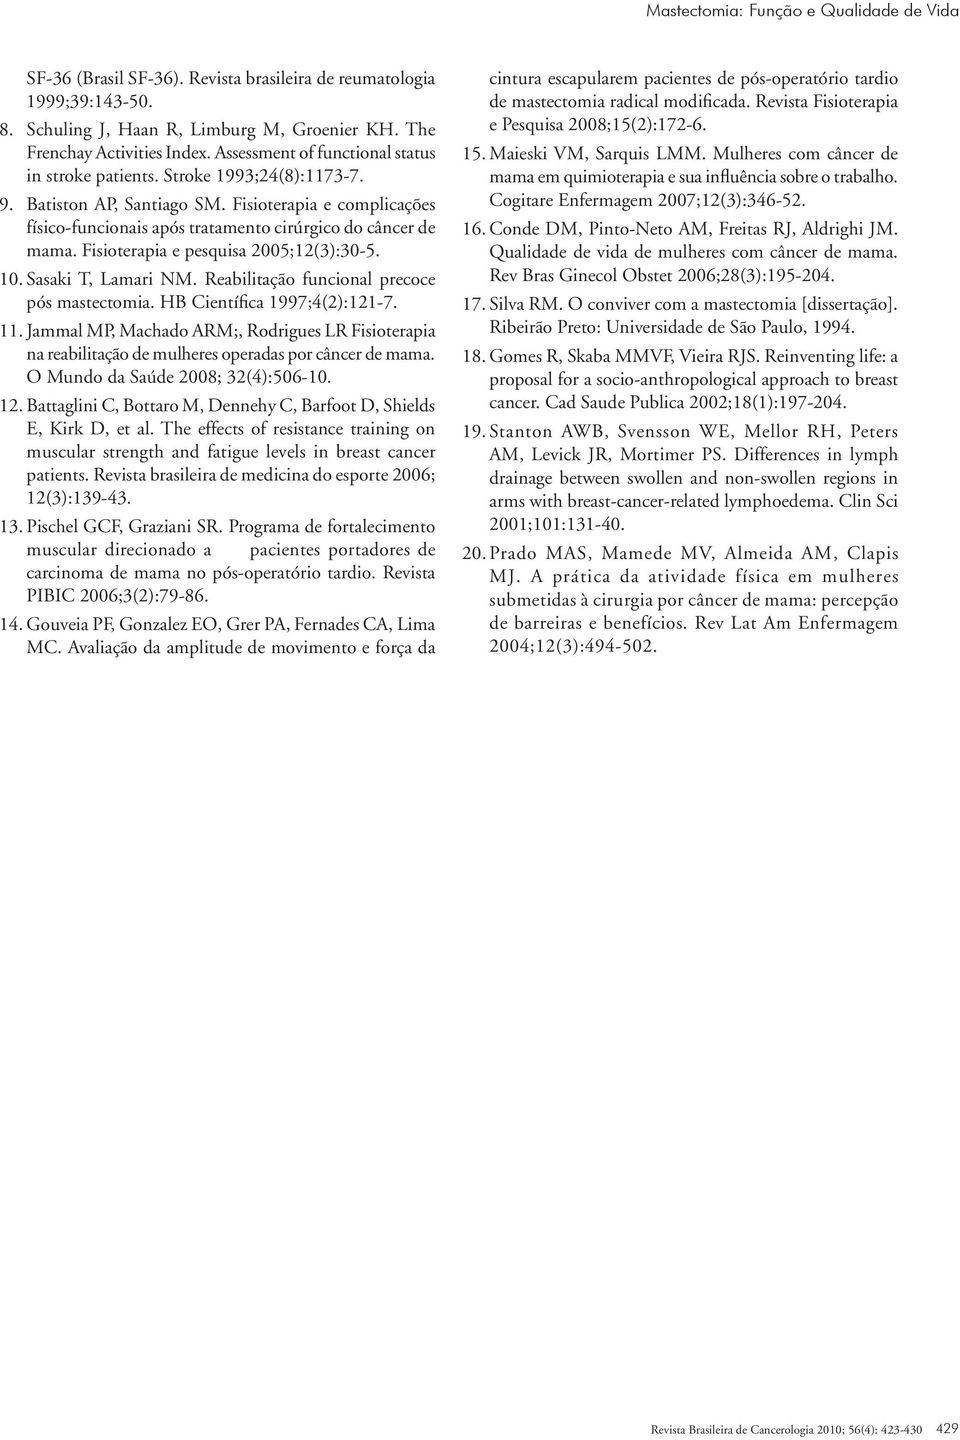 Fisioterapia e pesquisa 2005;12(3):30-5. 10. Sasaki T, Lamari NM. Reabilitação funcional precoce pós mastectomia. HB Científica 1997;4(2):121-7. 11.